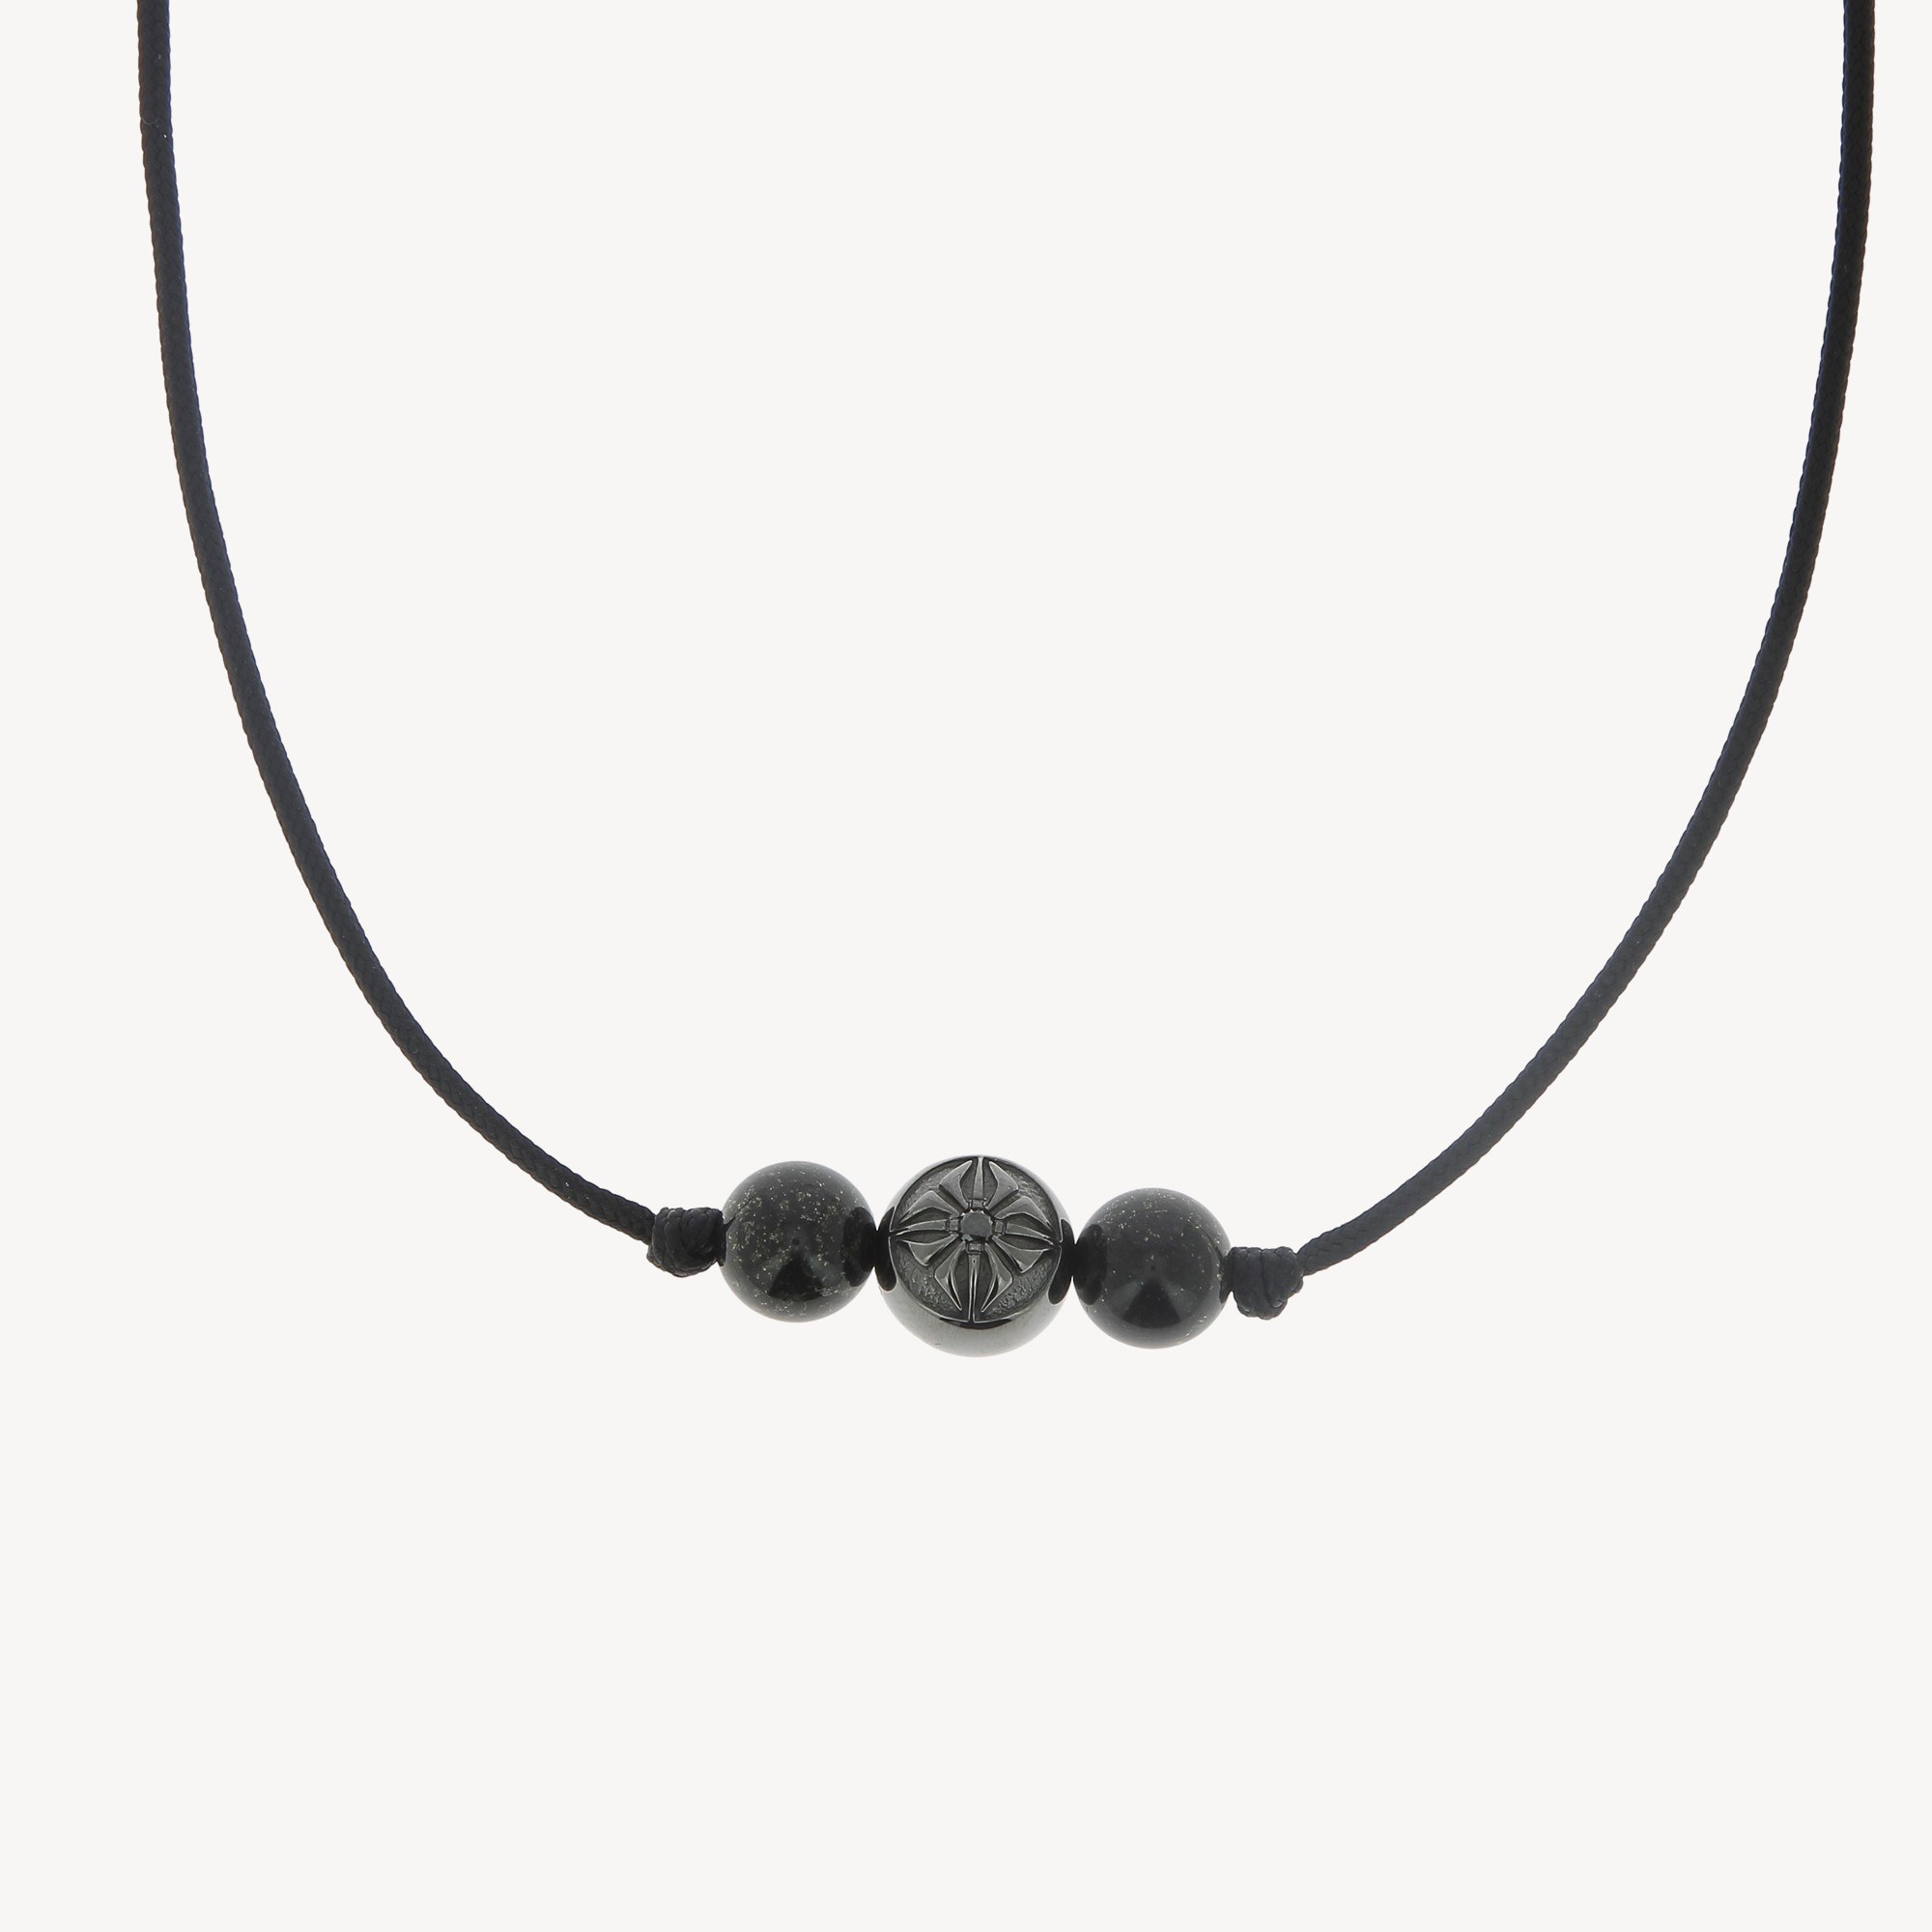 2 beads black jade necklace